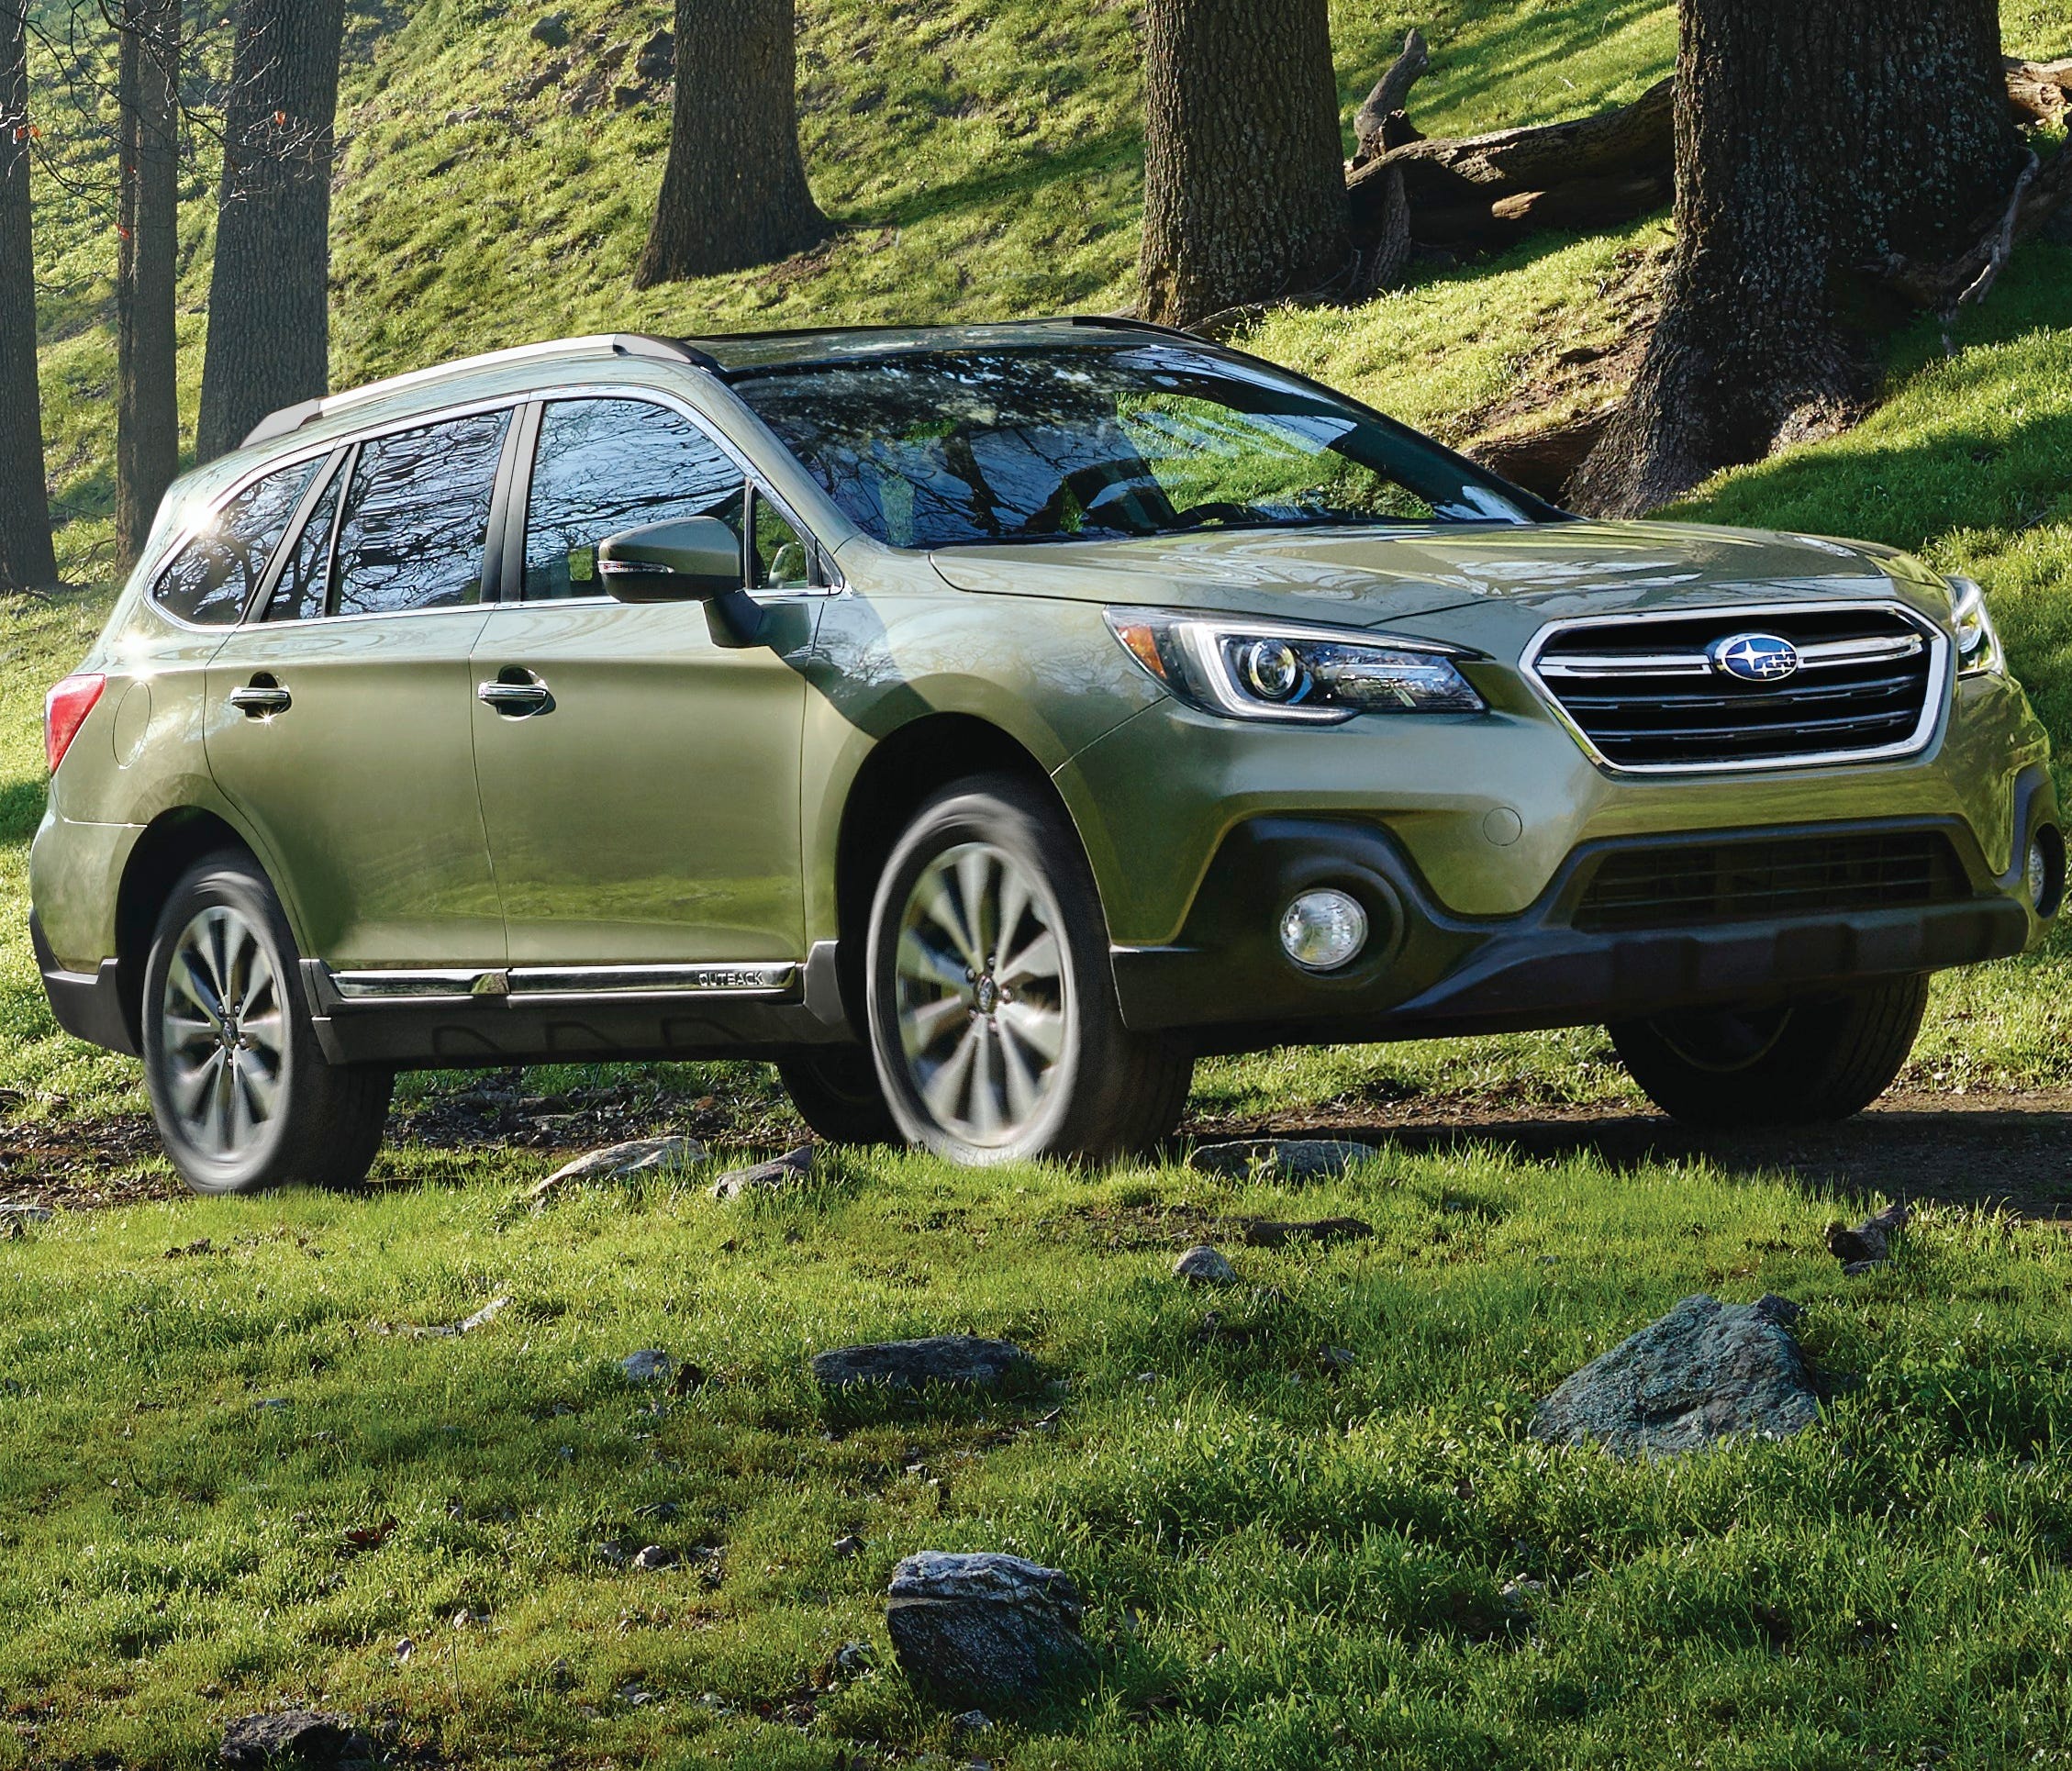 Best SUV-like wagon: Subaru Outback (tie)